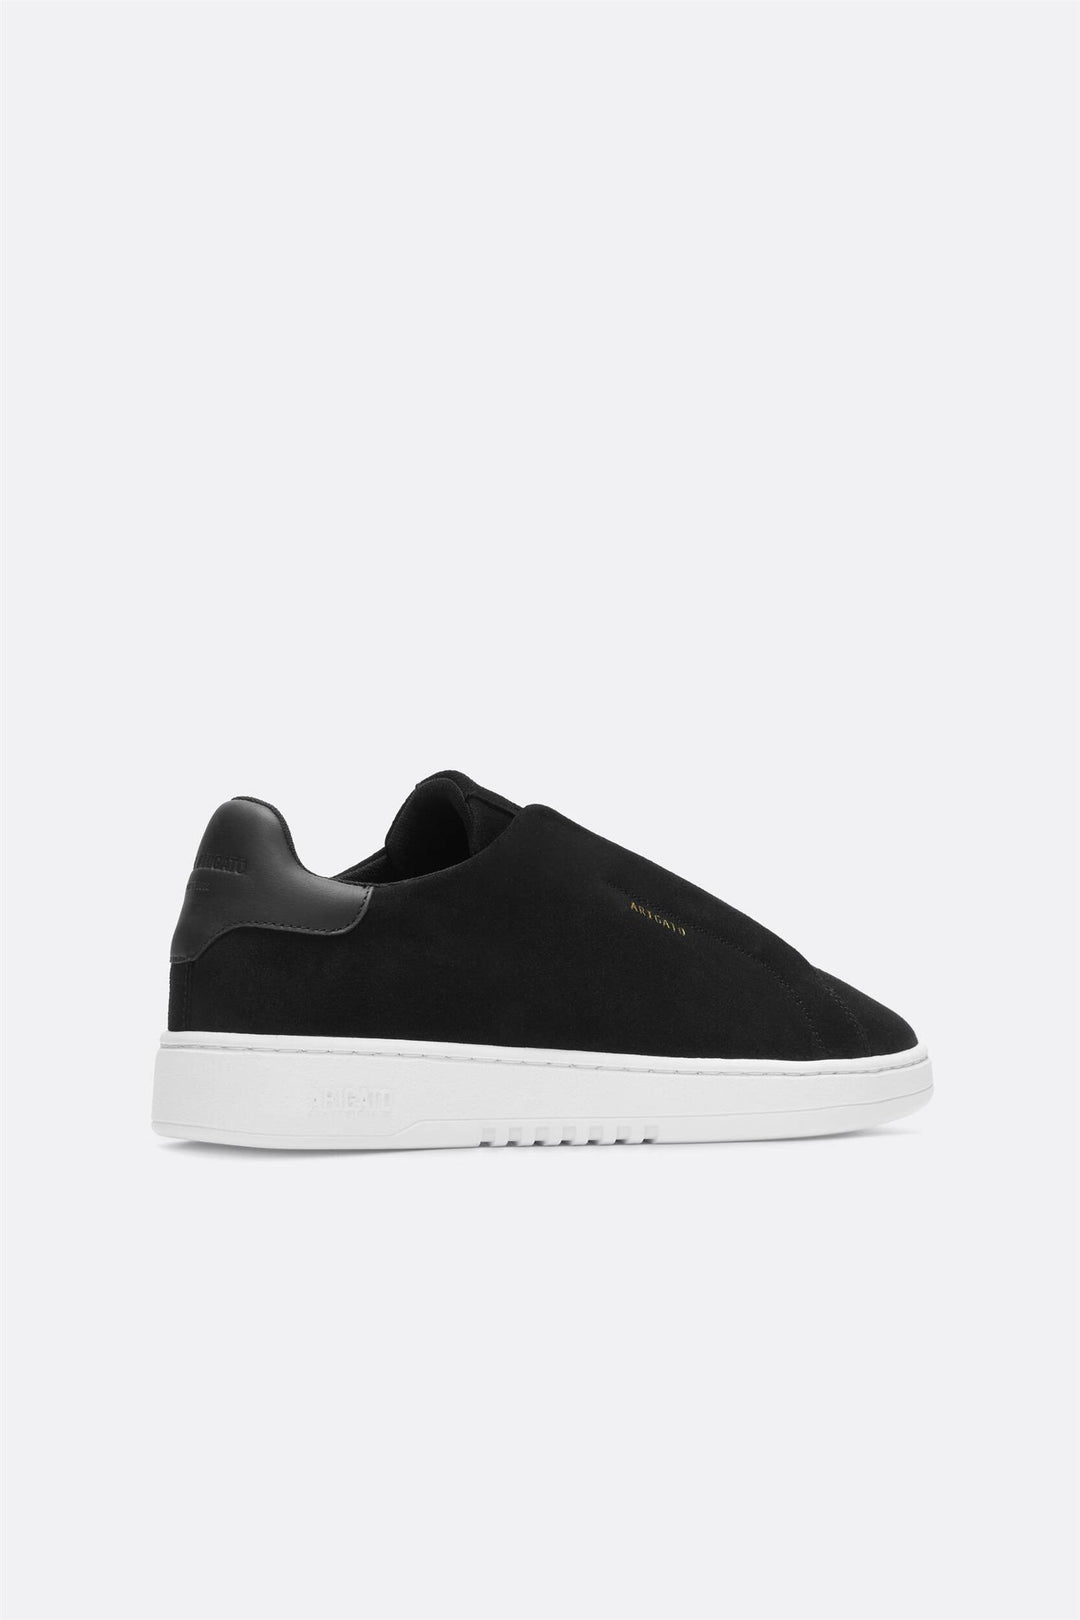 Dice Laceless Sneaker Black/White